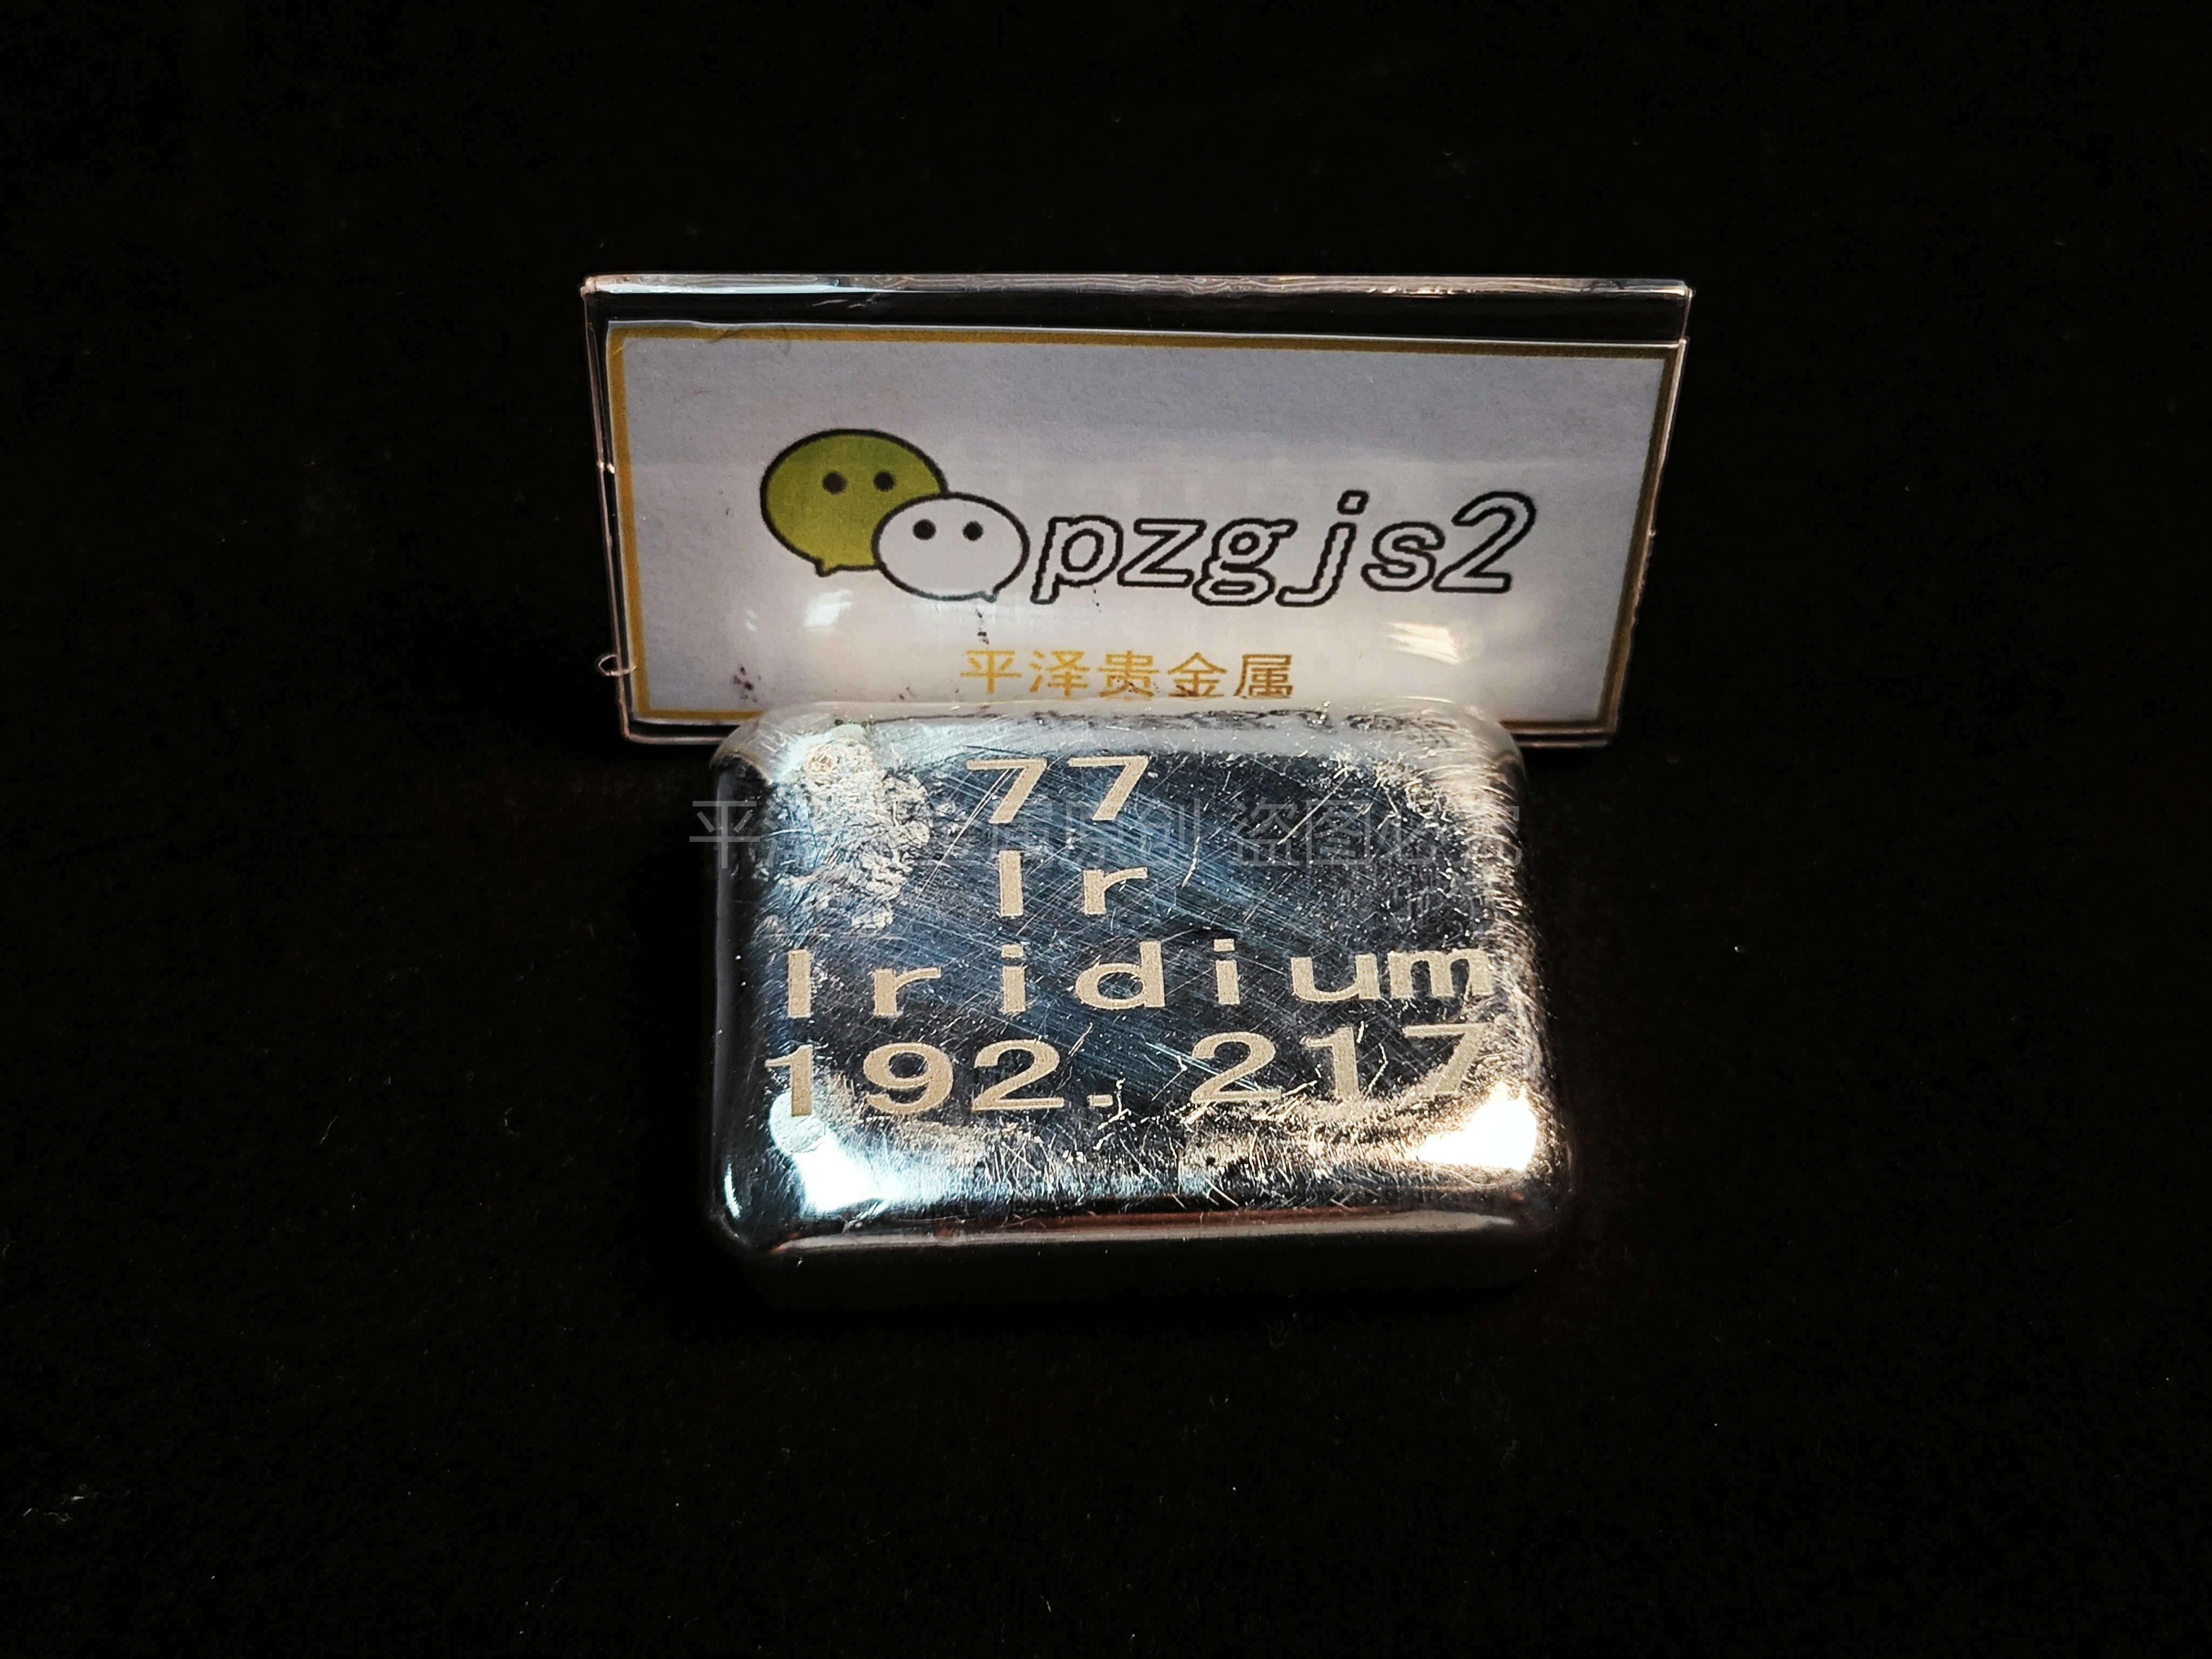 Copper iridium buyers where to find? Application range of copper iridium.